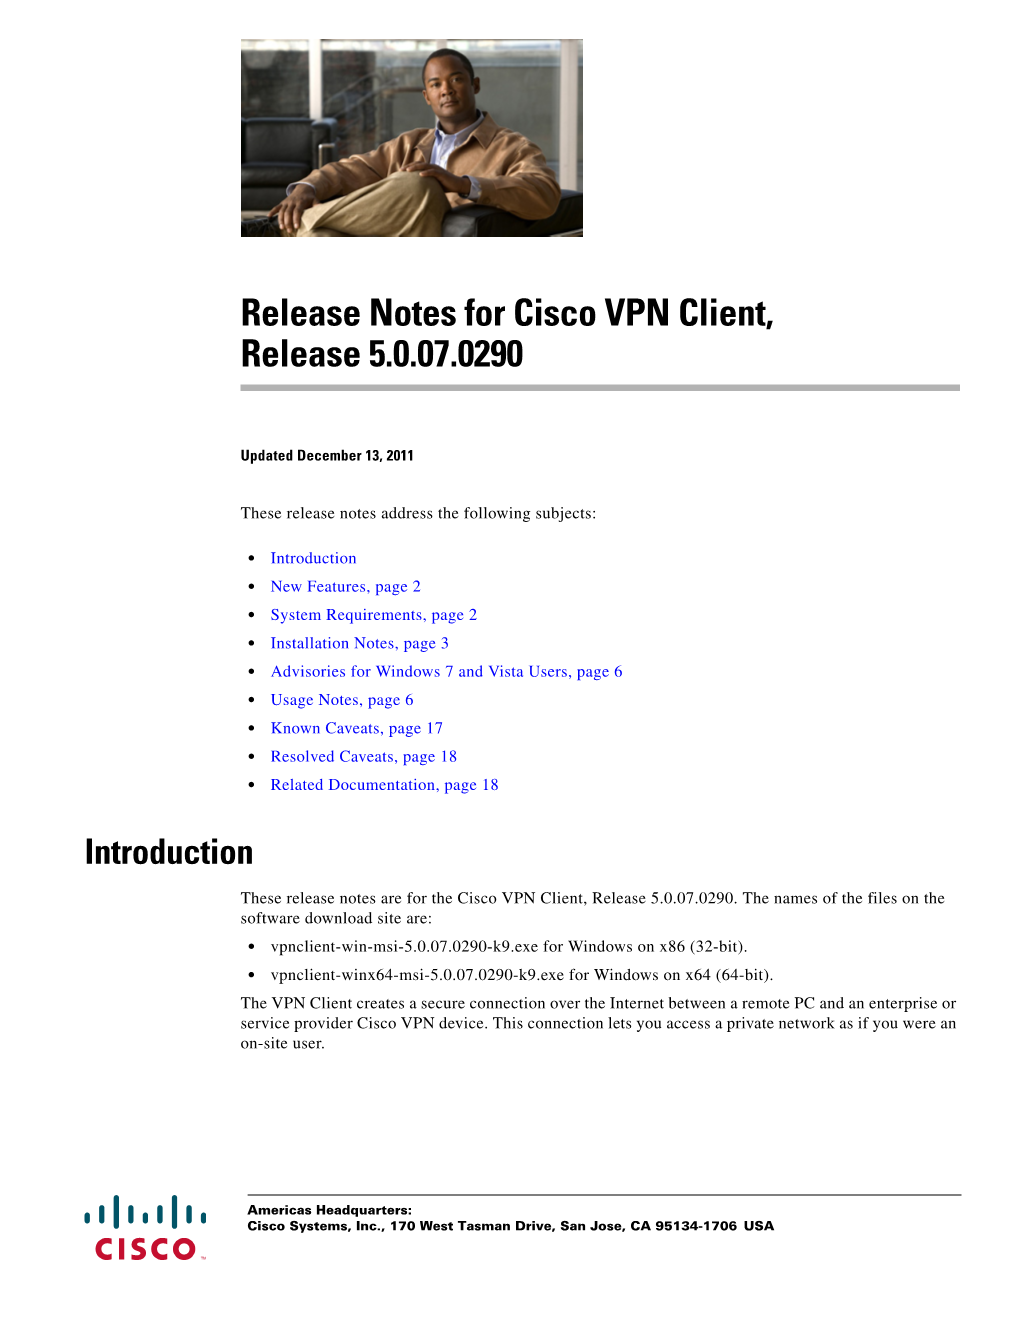 Release Notes for Cisco VPN Client, Release 5.0.07.0290